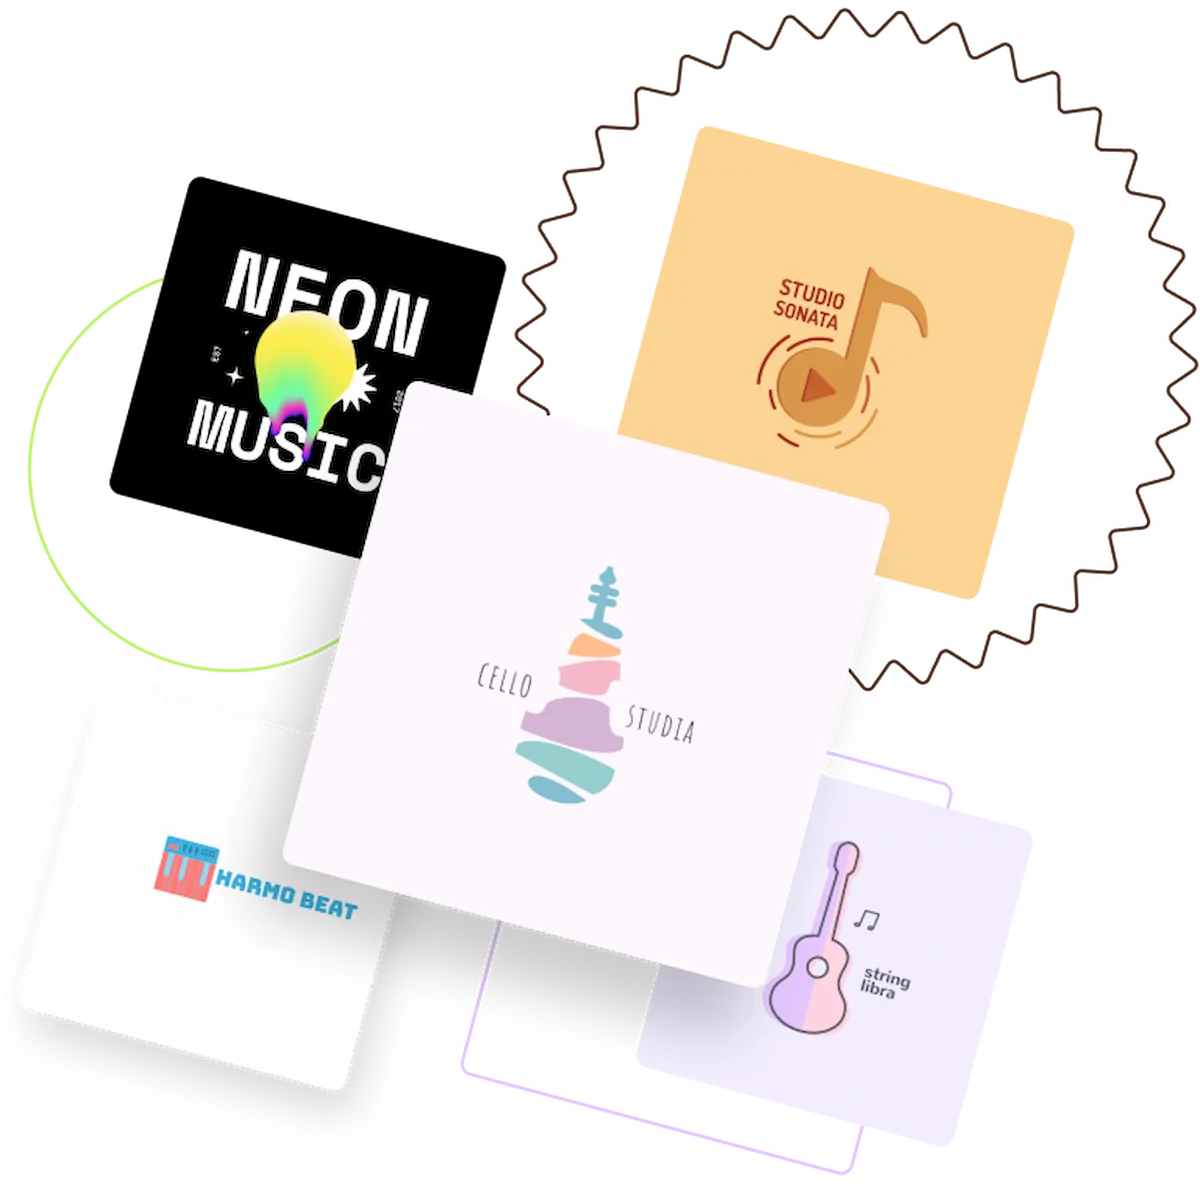 Band Logo Maker - Create And Design Band Logos | VistaCreate